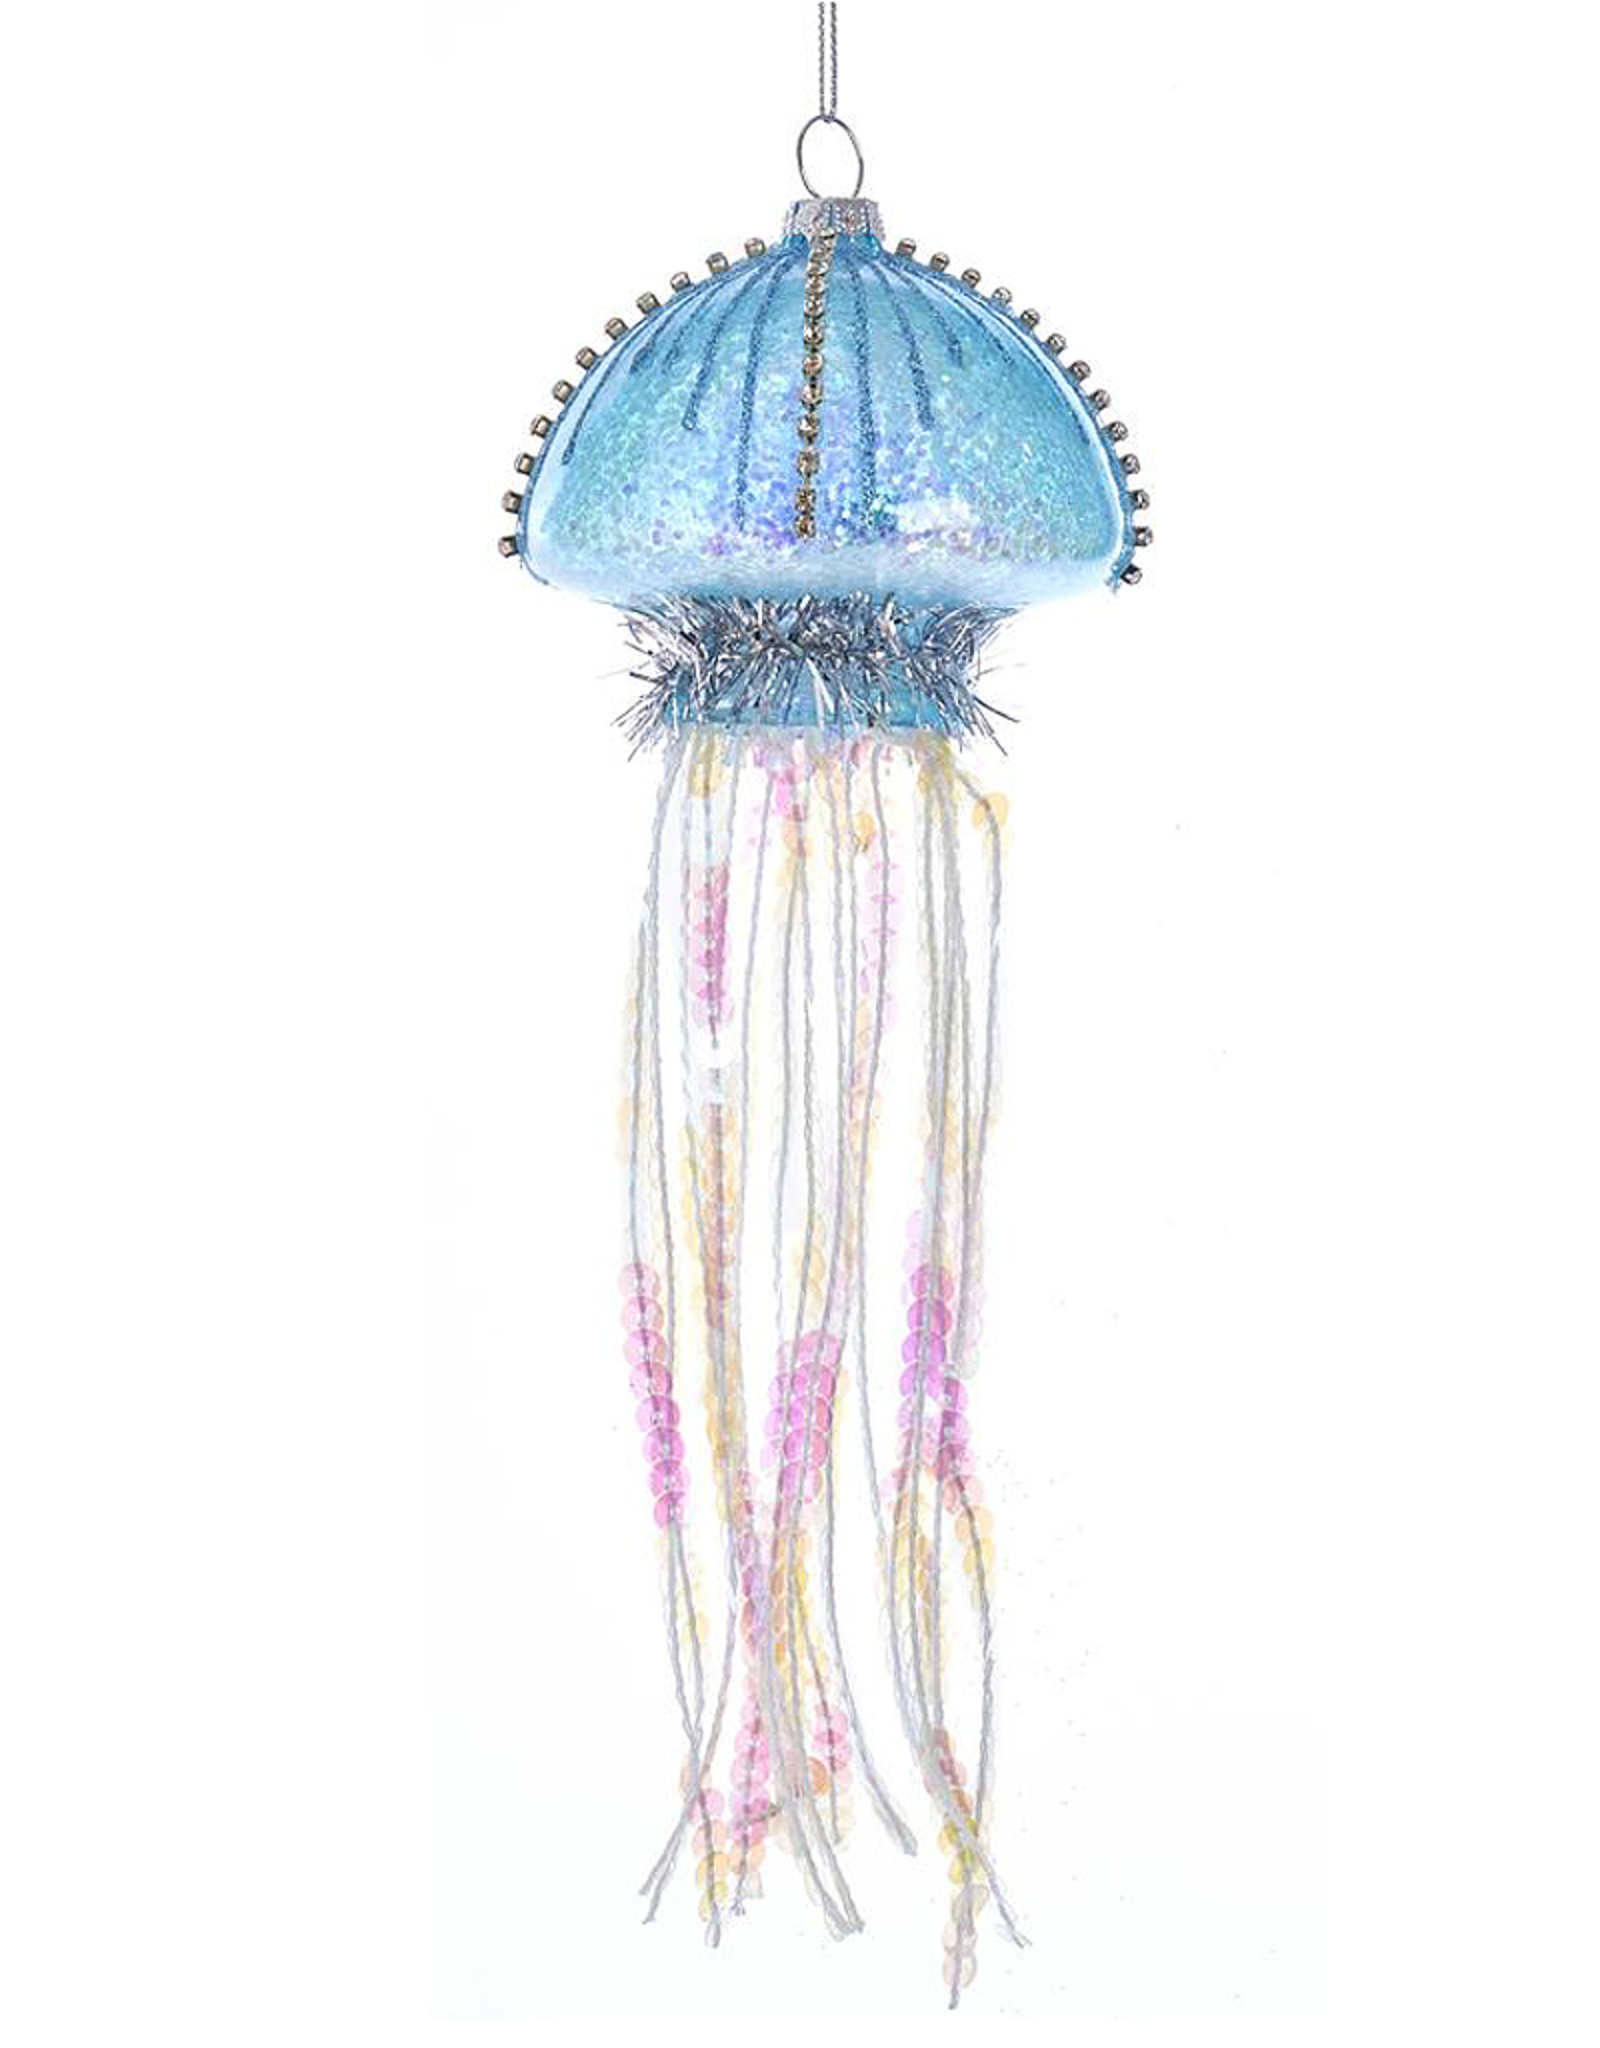 Kurt Adler Glass Jellyfish Ornament Glittered w Sequin Tentacles Blue